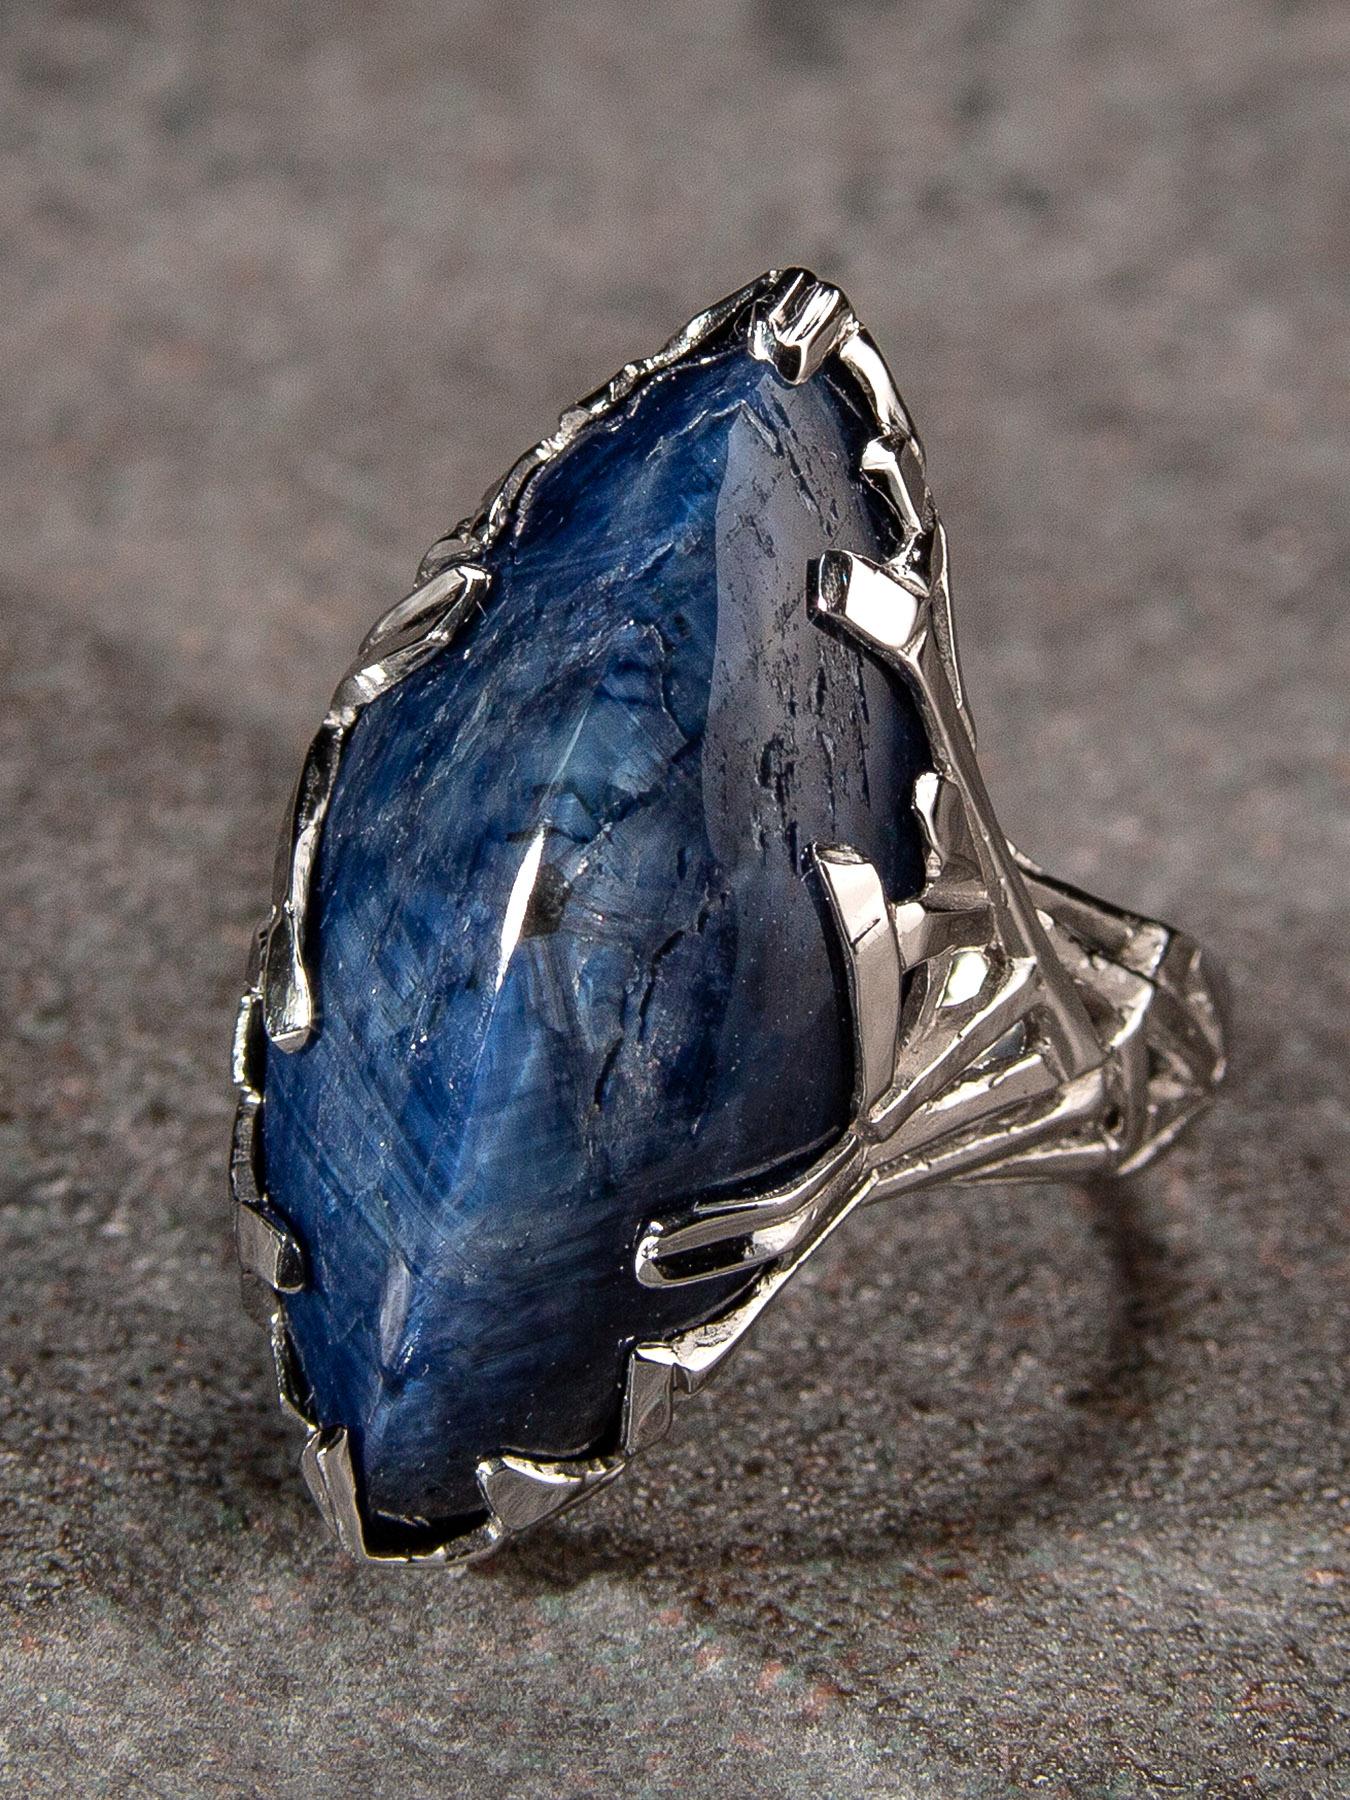 14K white gold ring with natural cabochon-cut Sapphire 
Sapphire origin - Sri-Lanka
Sapphire measurements - 0.31 х 0.51 х 1.1 in / 8 х 13 х 28 mm
gemstone weight - 25.80 carats
ring weight - 12.13 grams
ring size - 6.5 US (this ring may be resized,